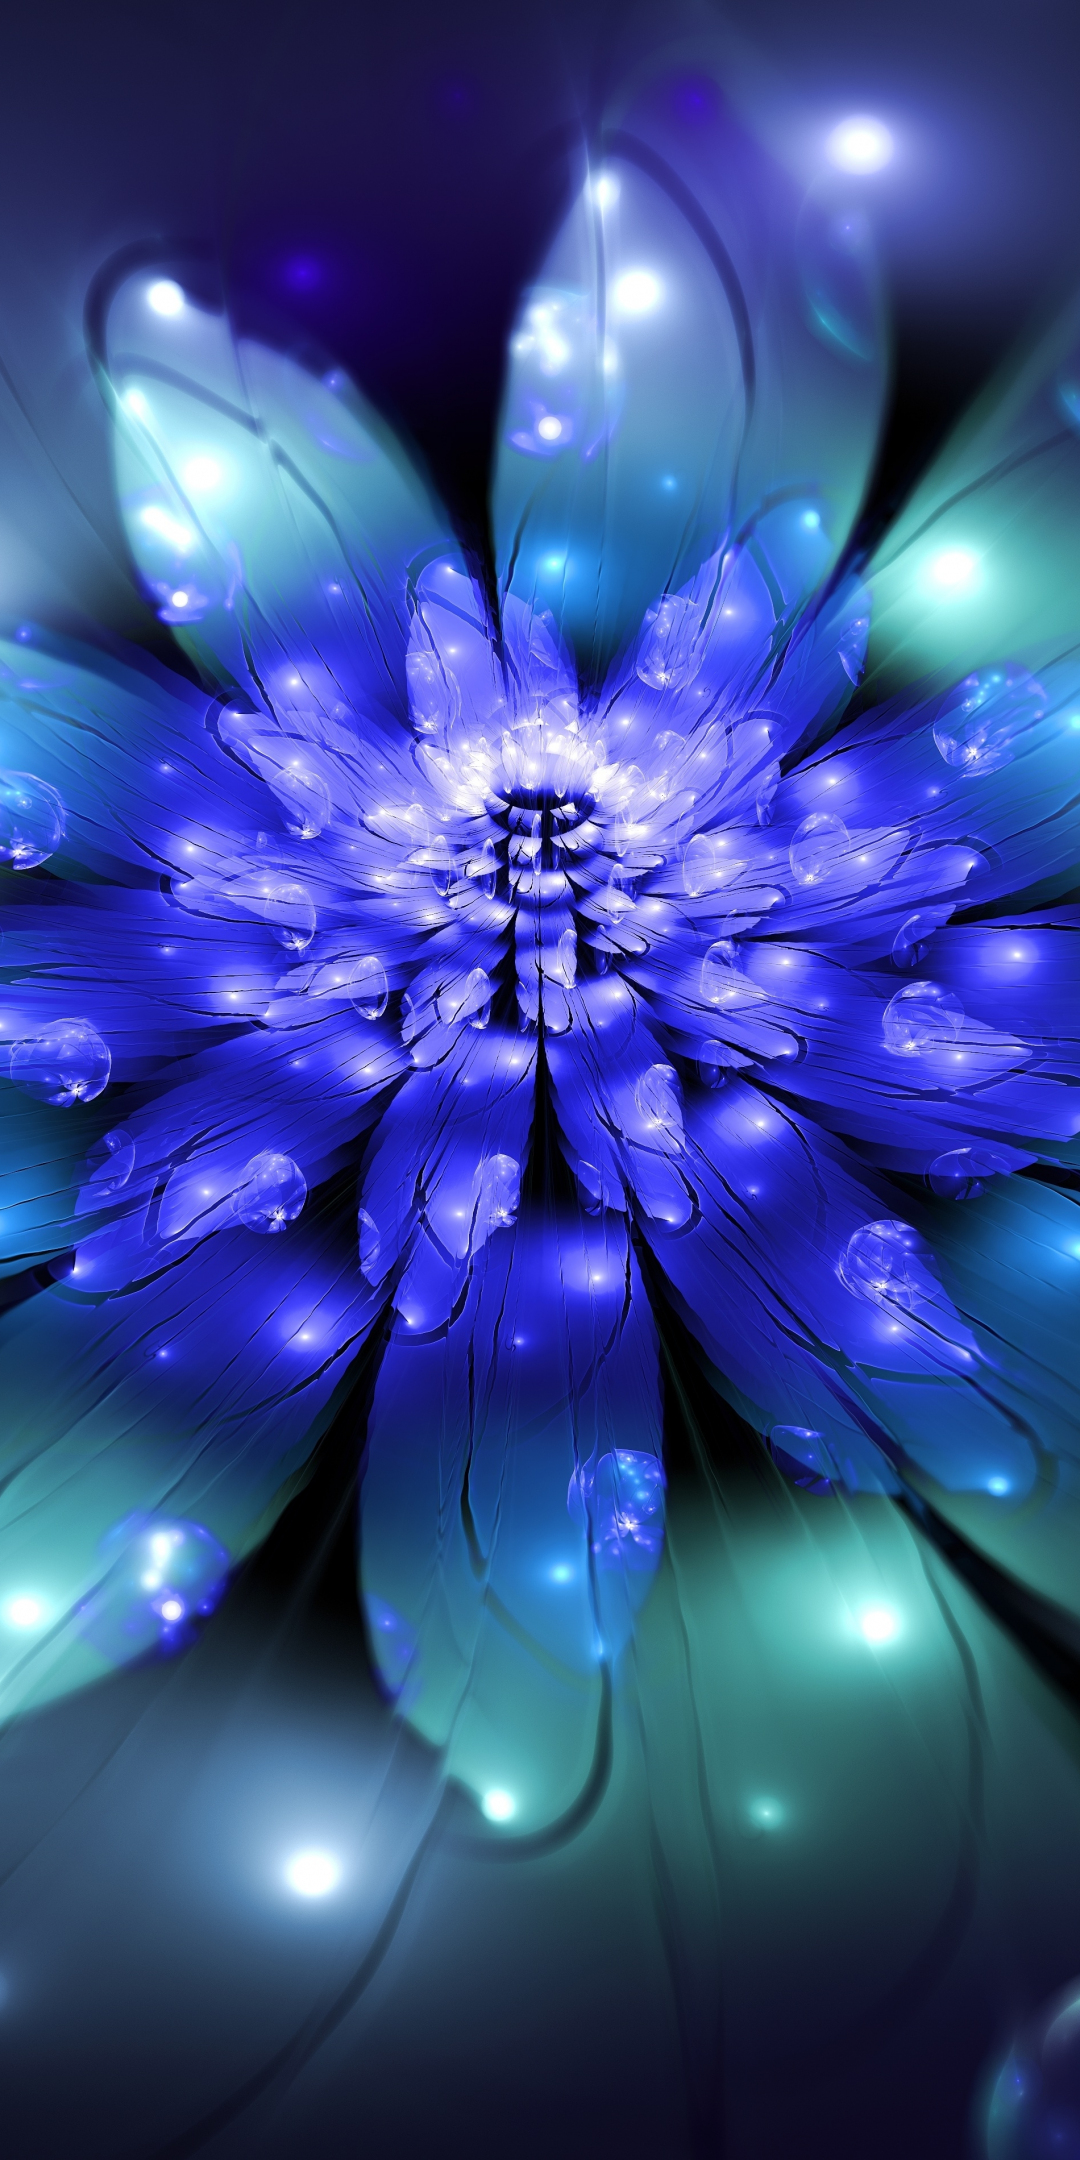 Blue & bright flower, digital art, 1080x2160 wallpaper